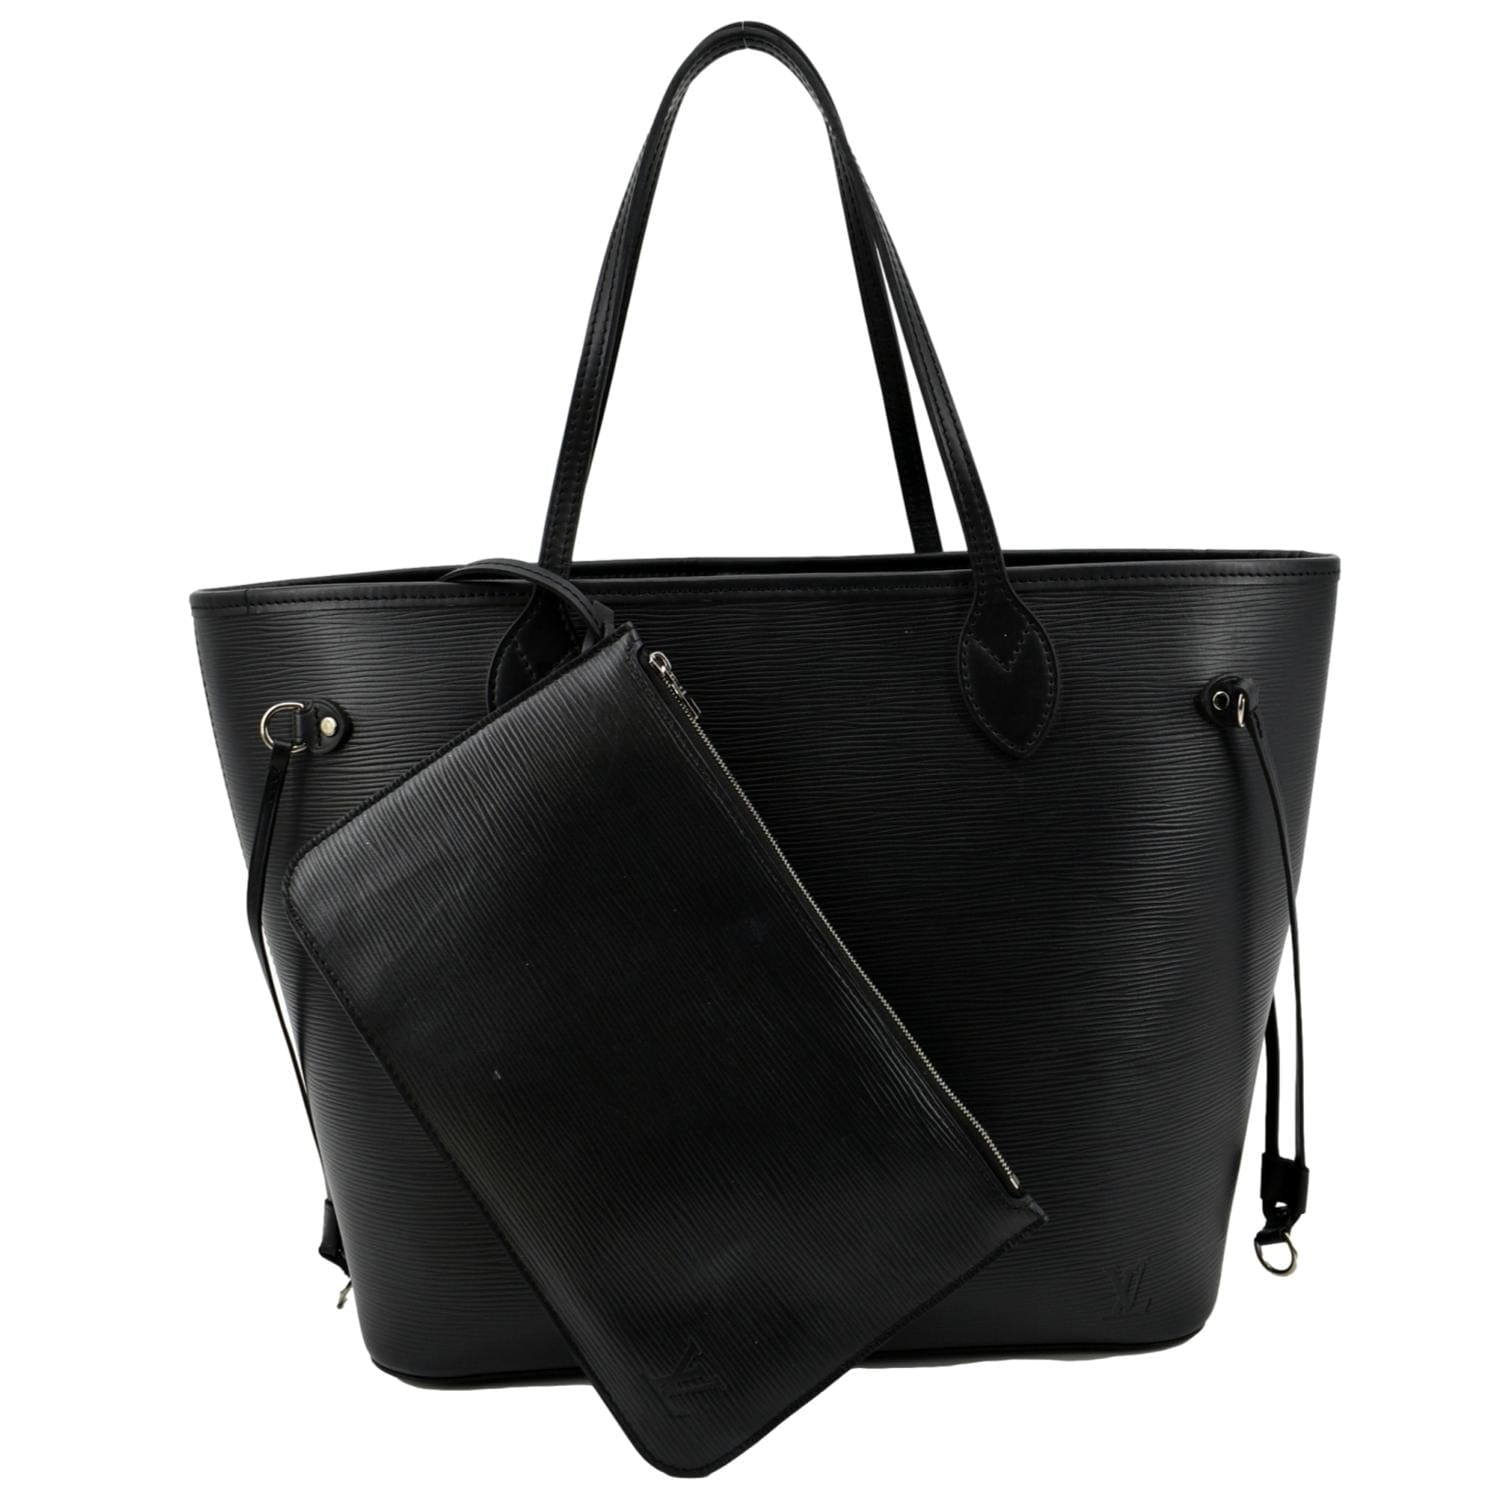 Louis Vuitton Neverfull EPI Leather Tote Shoulder Bag